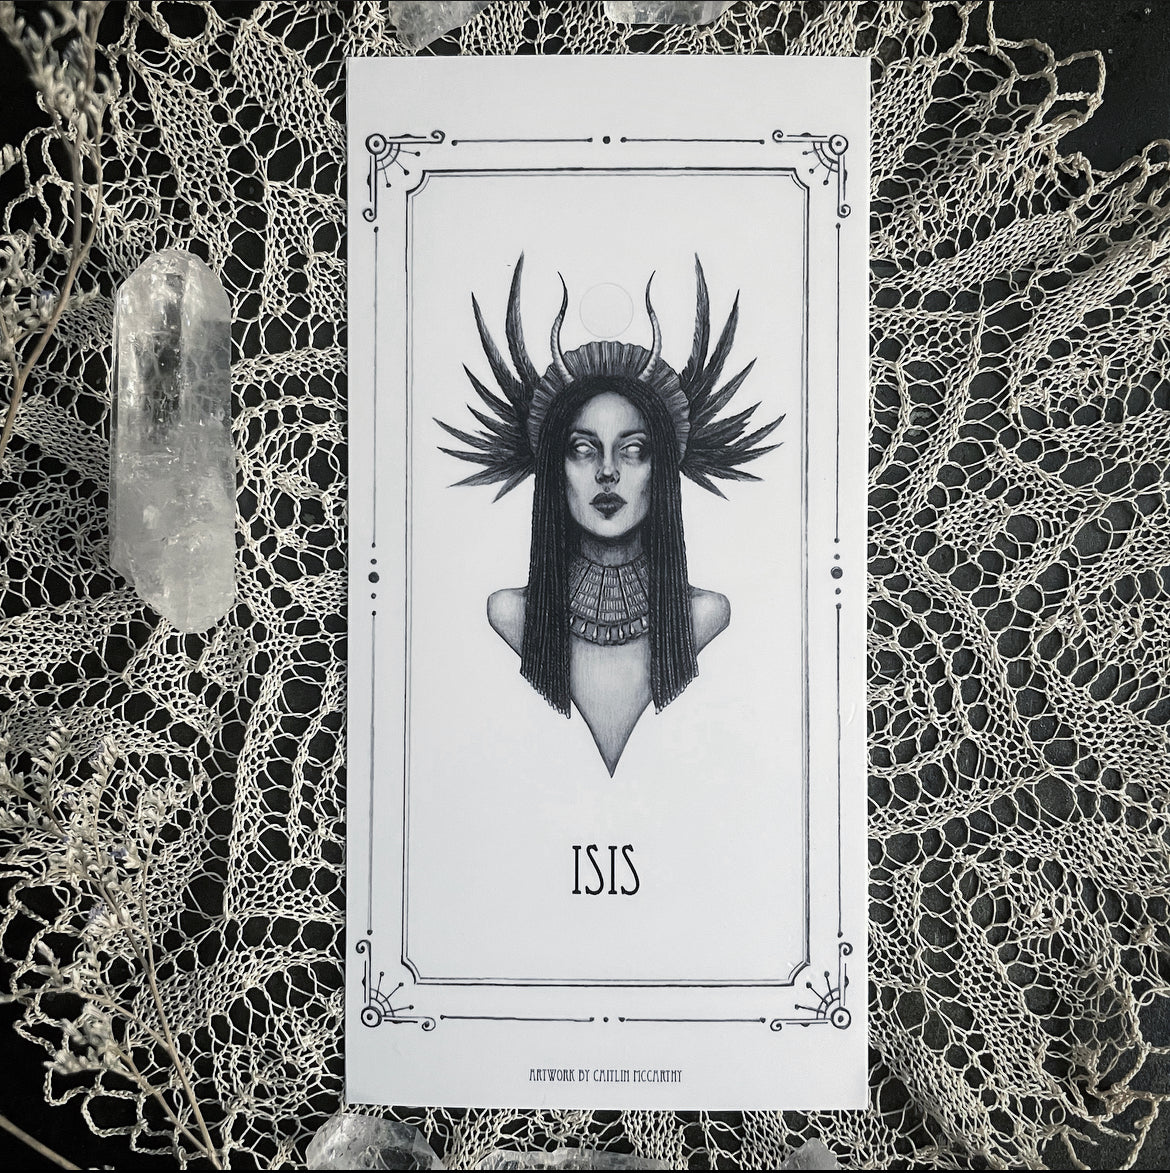 Isis Devotional Candle Sticker - 3x6” High Quality Vinyl Sticker